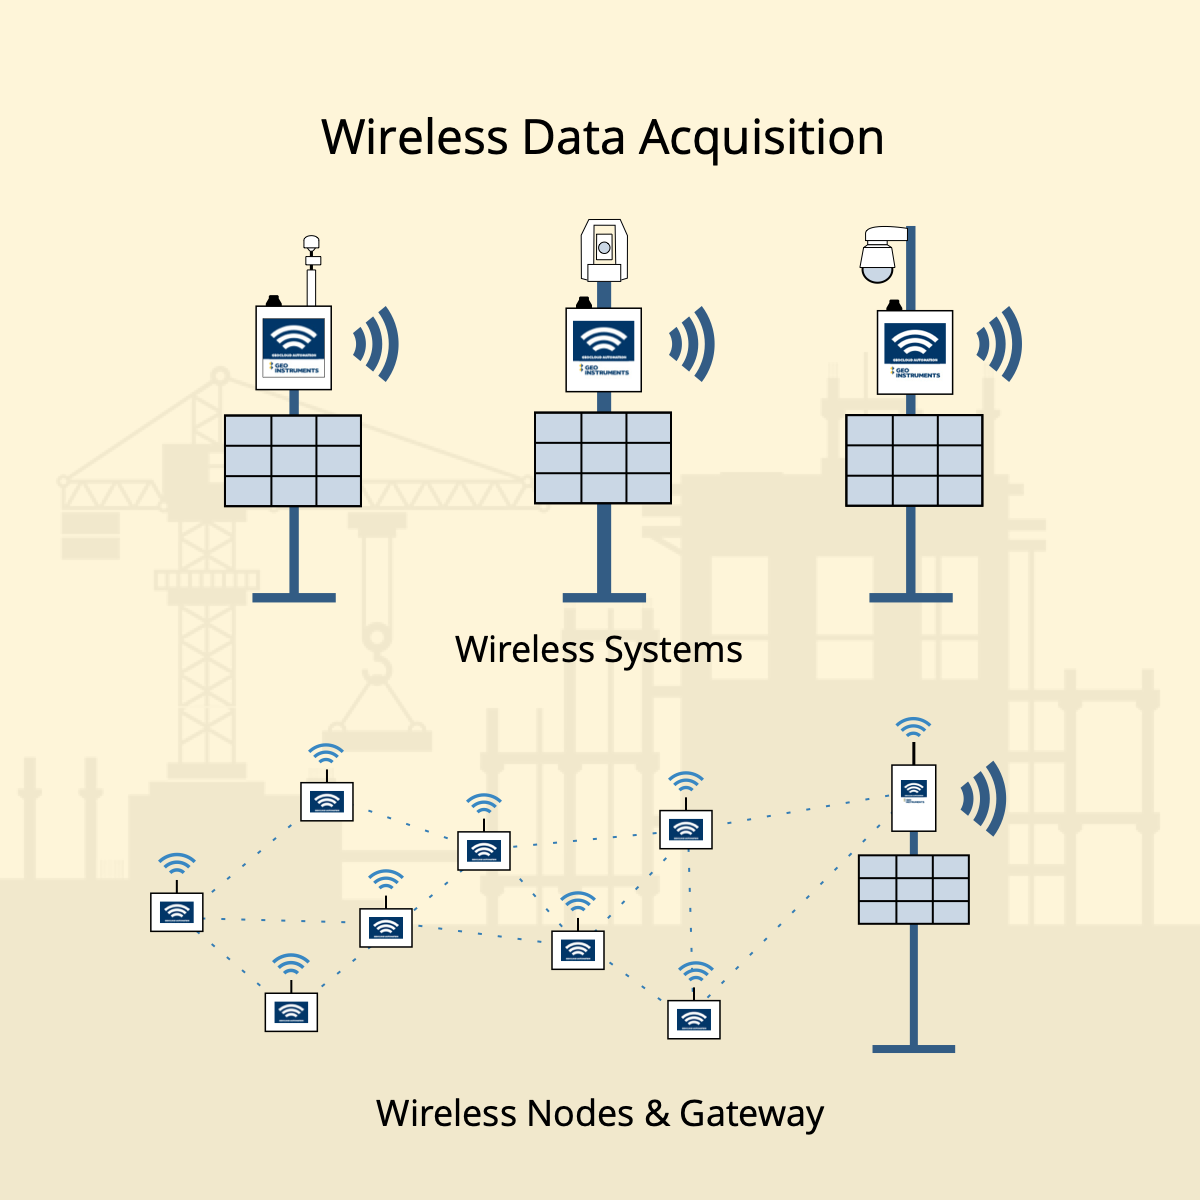 Wireless Data Acquisition